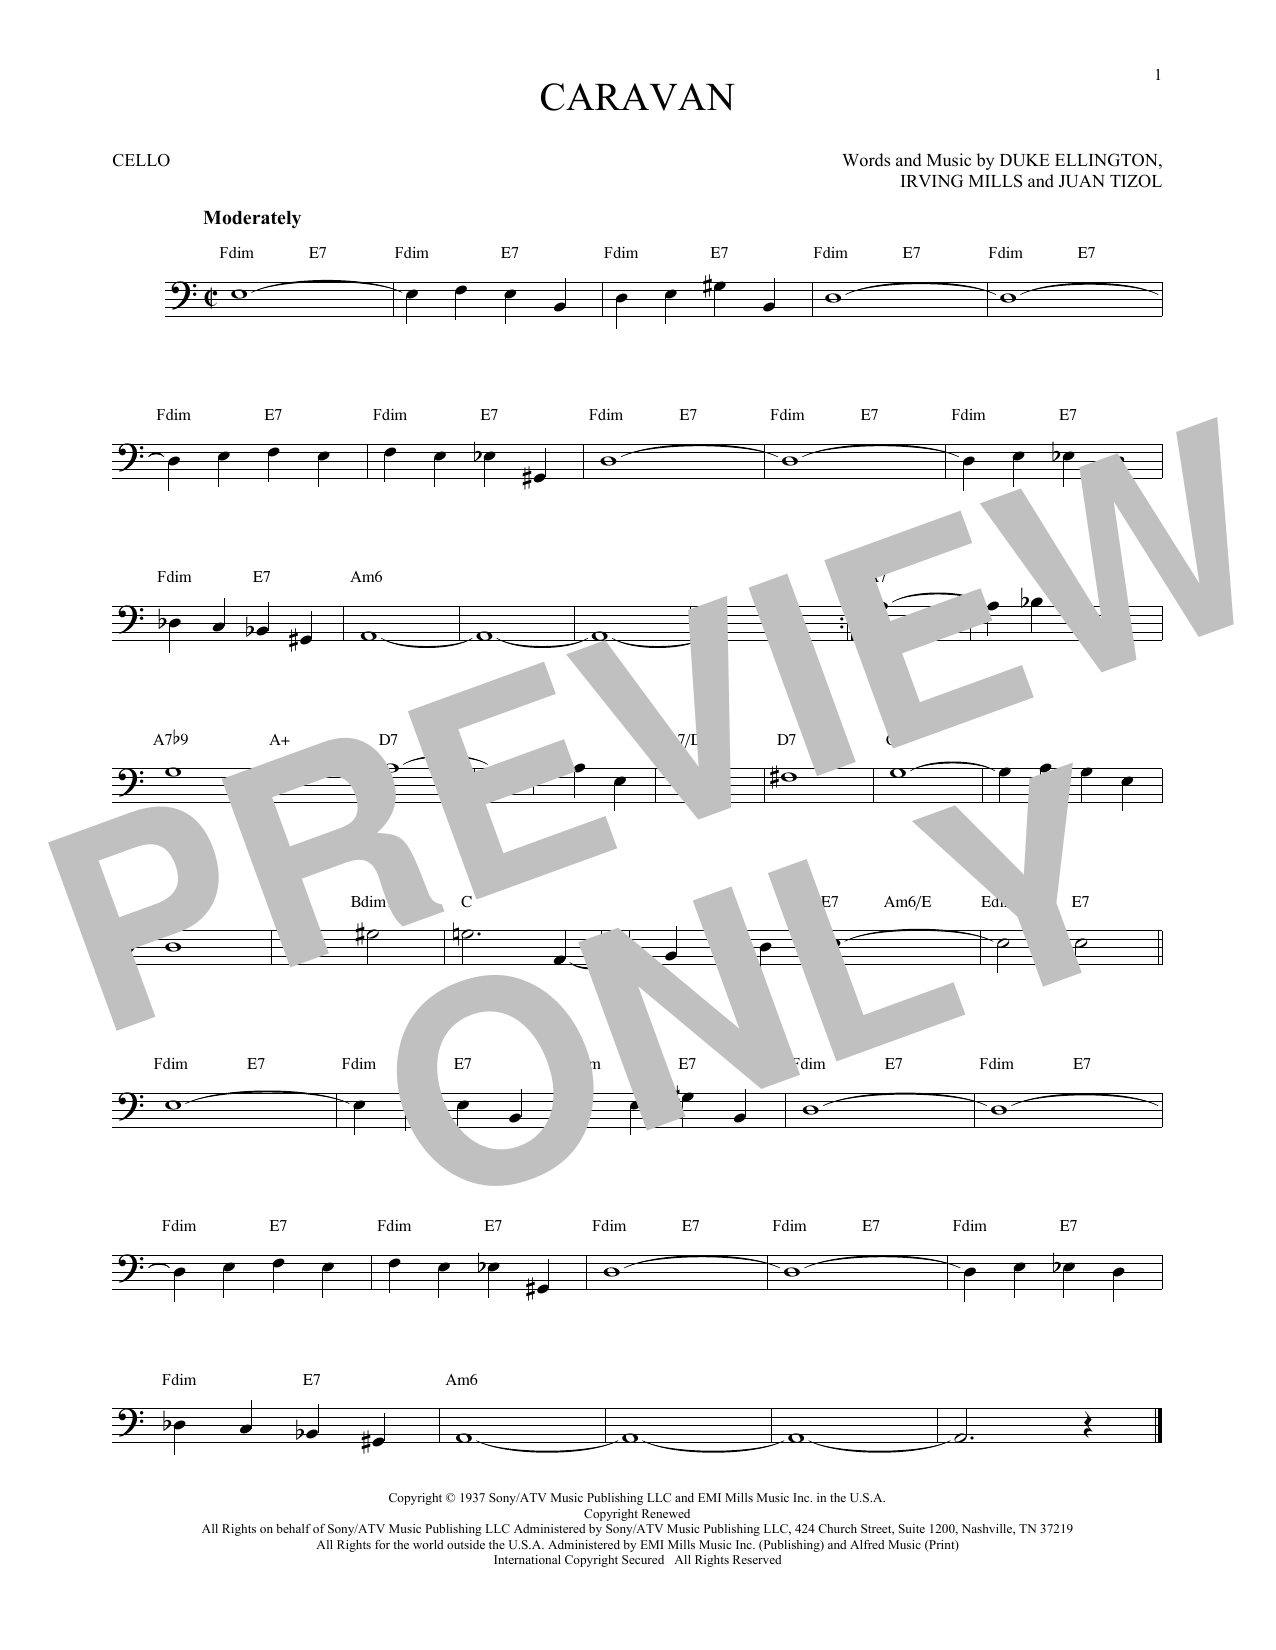 Download Juan Tizol & Duke Ellington Caravan Sheet Music and learn how to play Trumpet PDF digital score in minutes